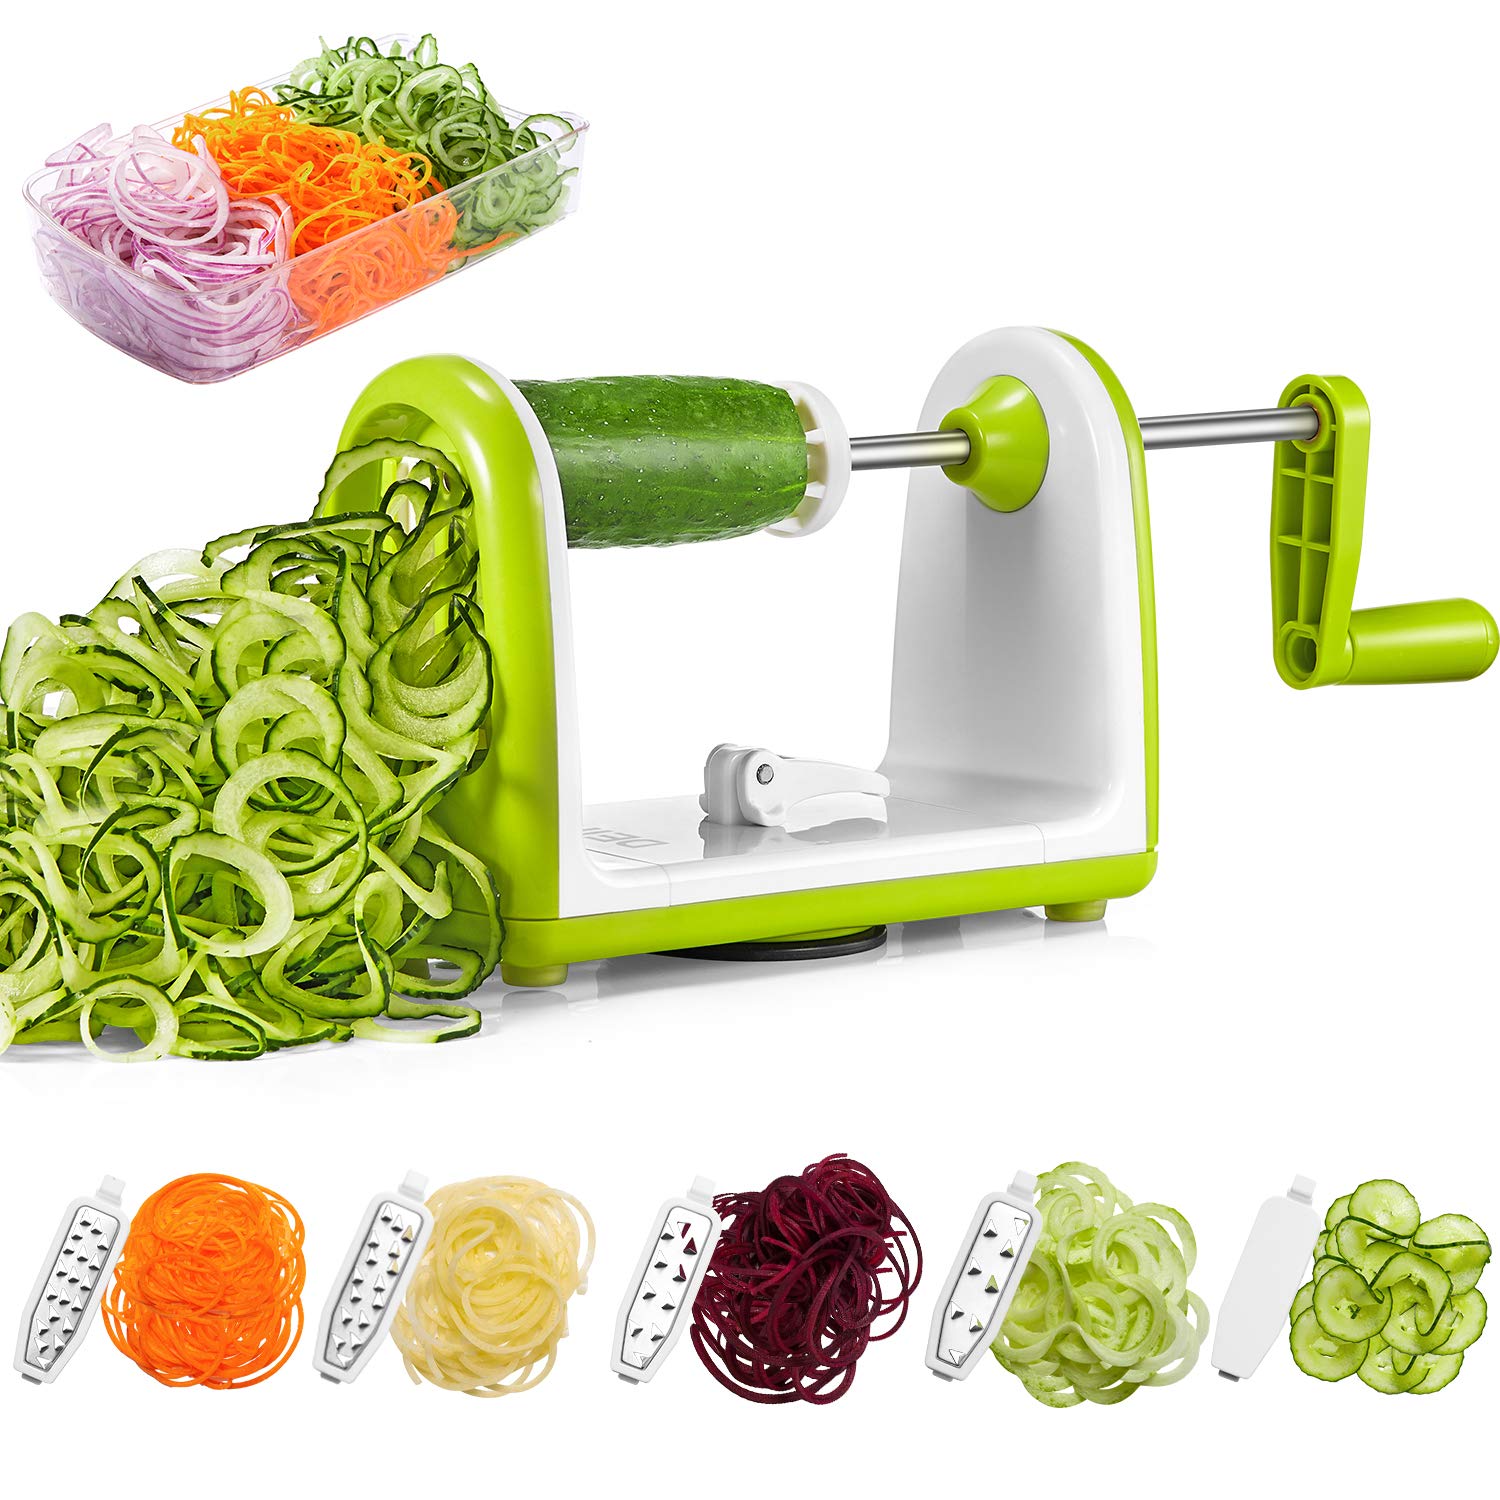 Spiralizer Vegetable Slicer, Spiral Slicer Strongest-and-Heaviest Duty Salad Utensil, Best Veggie Pasta & Spaghetti Maker for Low Carb/Paleo/Gluten-Free Meals